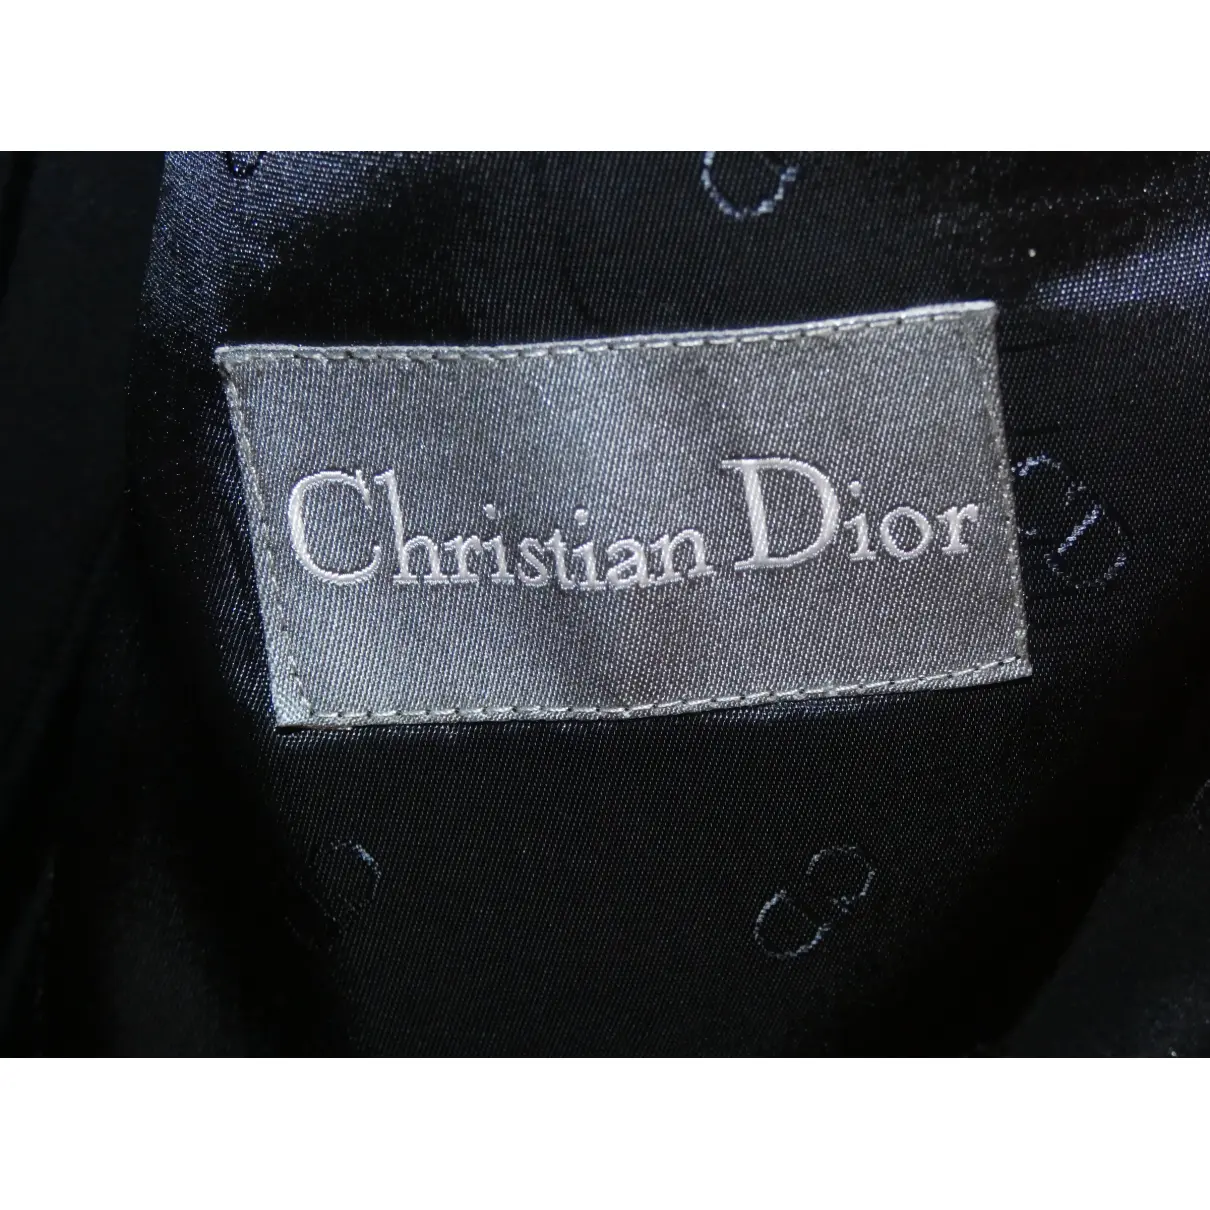 Buy Dior Homme Wool vest online